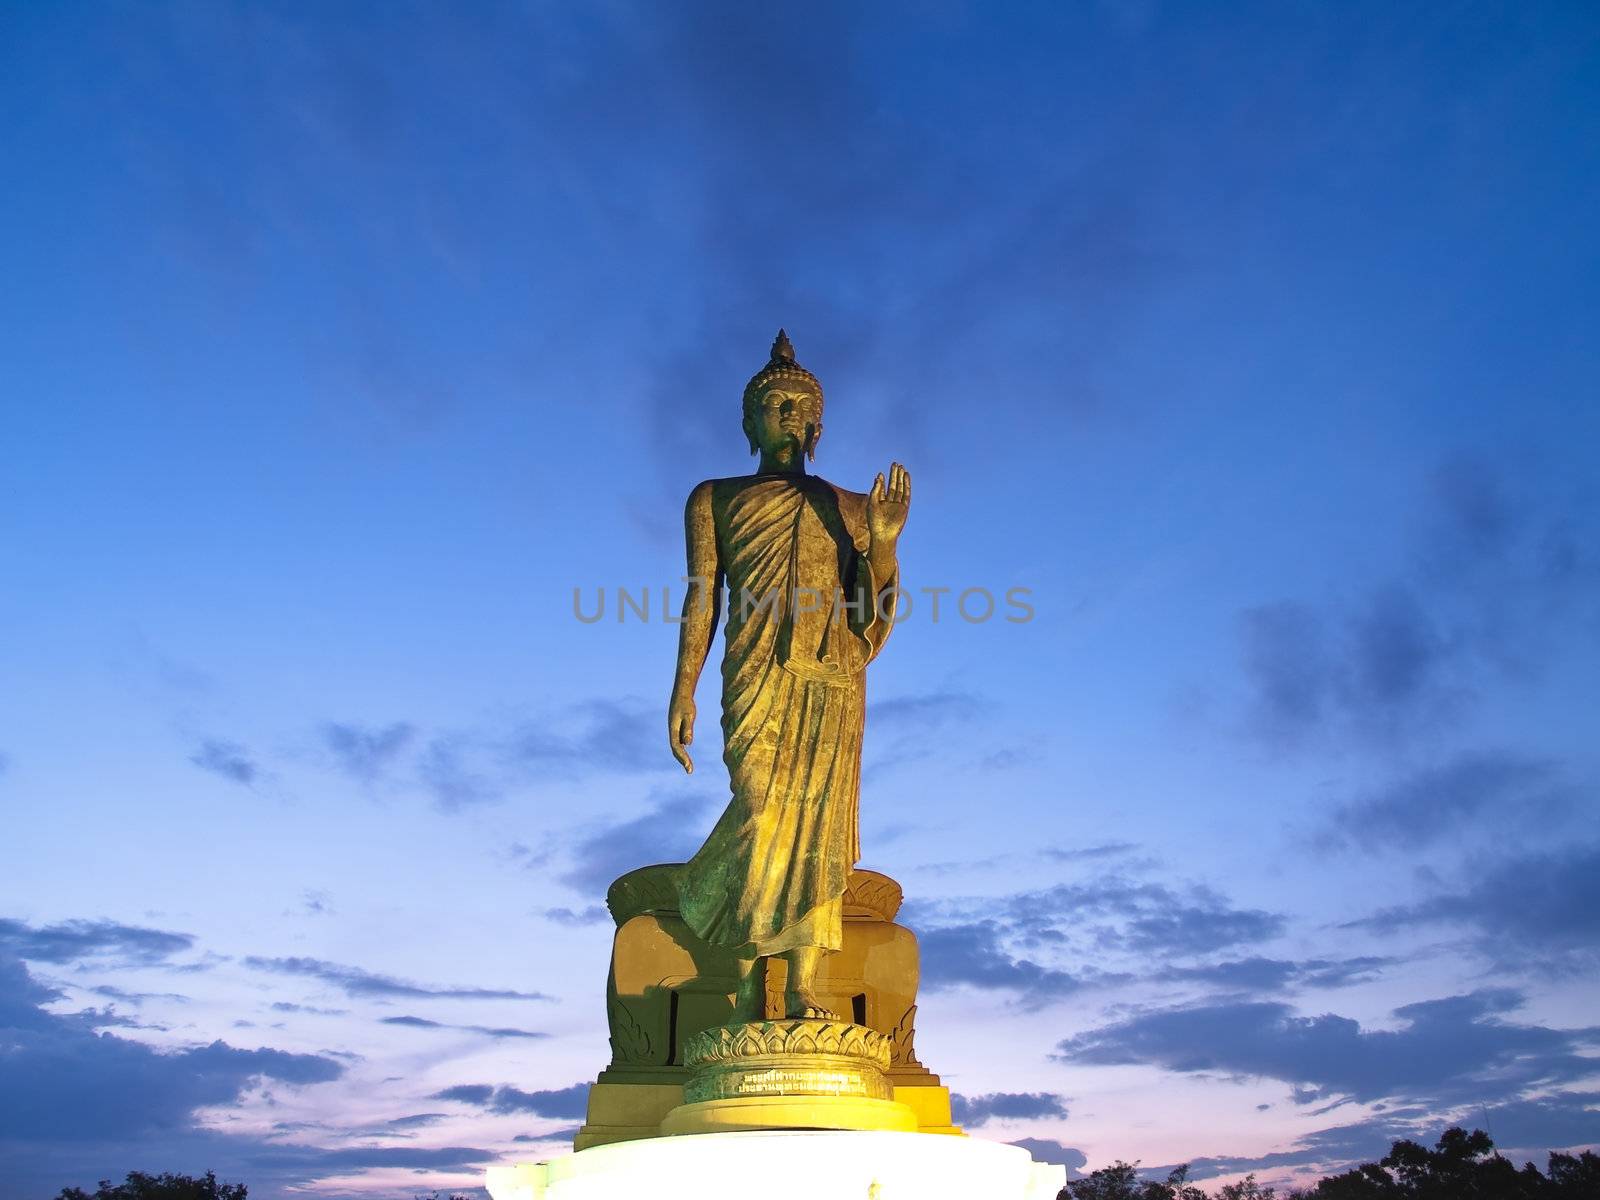 Walking Buddha image in Vitarka Mudra posture illuminate with spotlight at twilight time, Buddhamonthon, Nakhon Pathom, Thailand